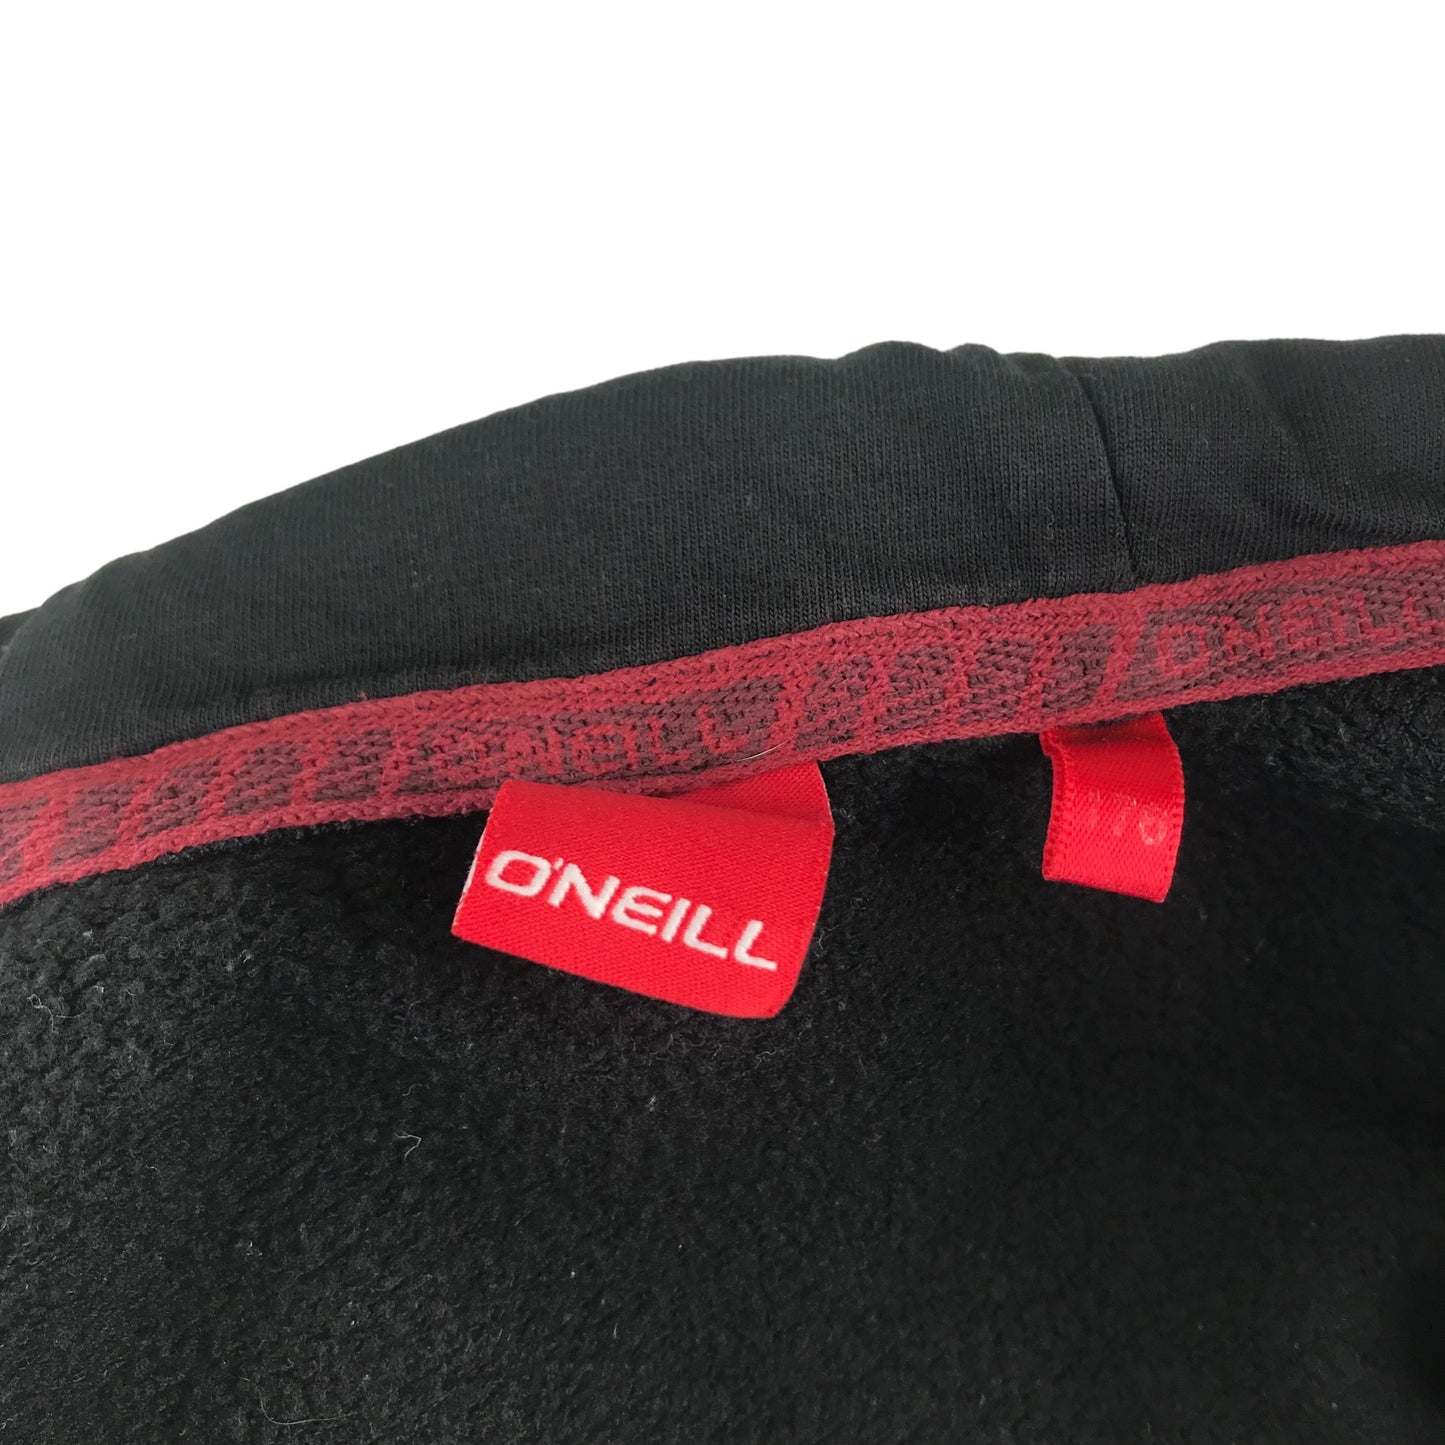 O'Neill Hoodie Age 15-16 Black full zipper printed